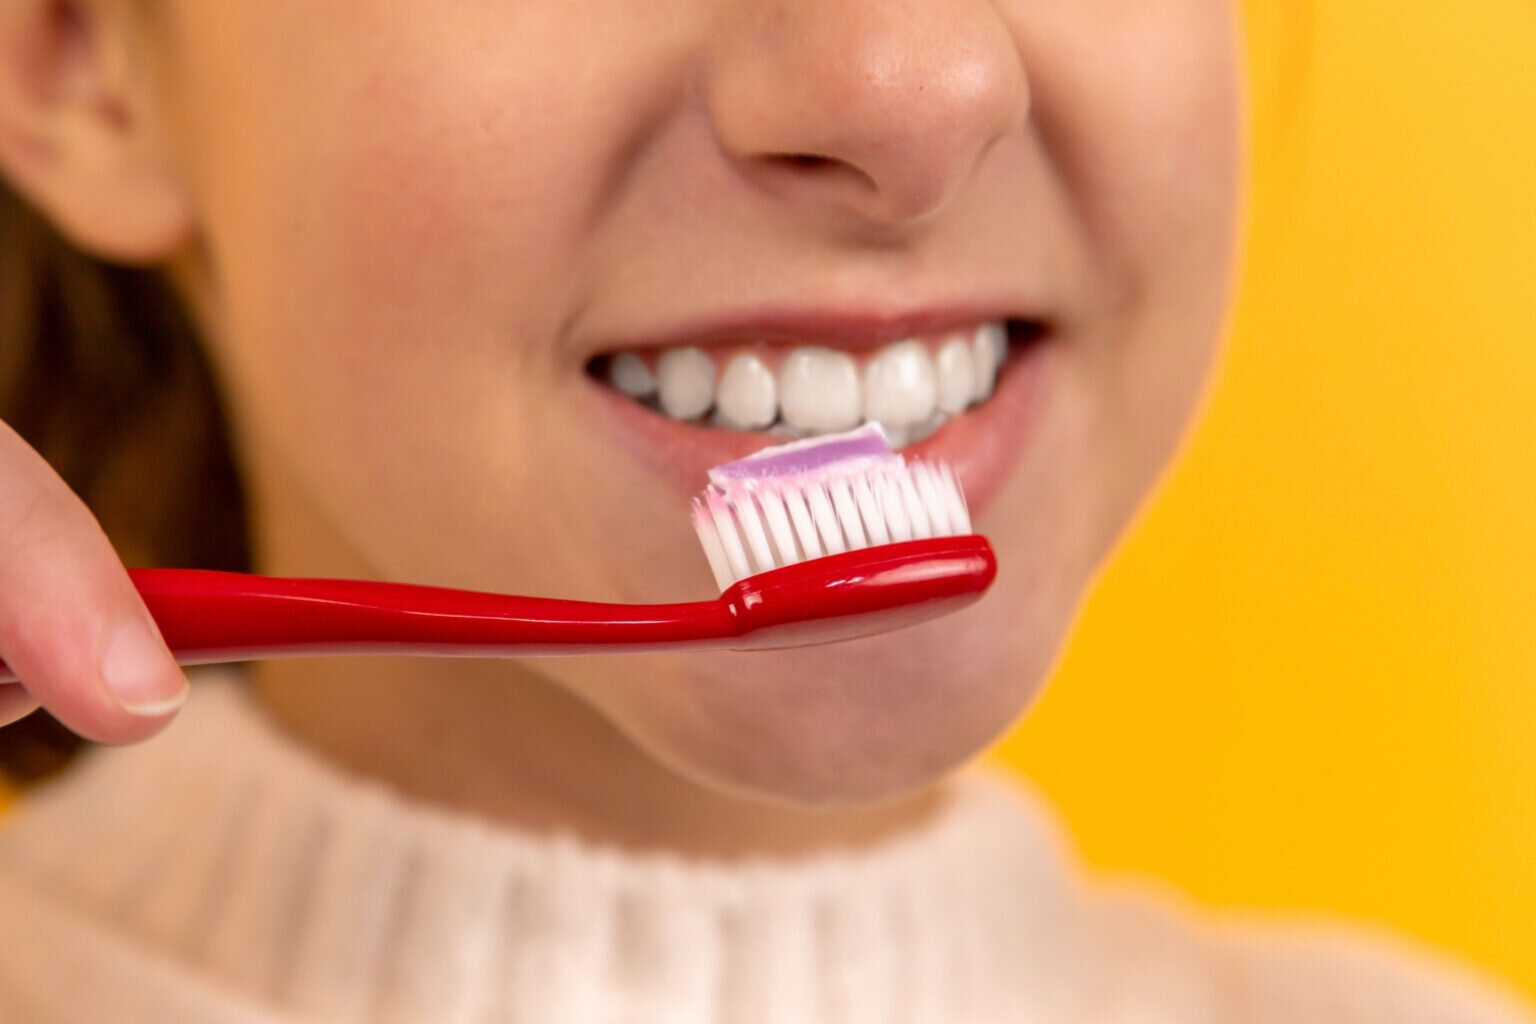 Sherman Oaks cosmetic dentistry model demonstrating how to brush your teeth